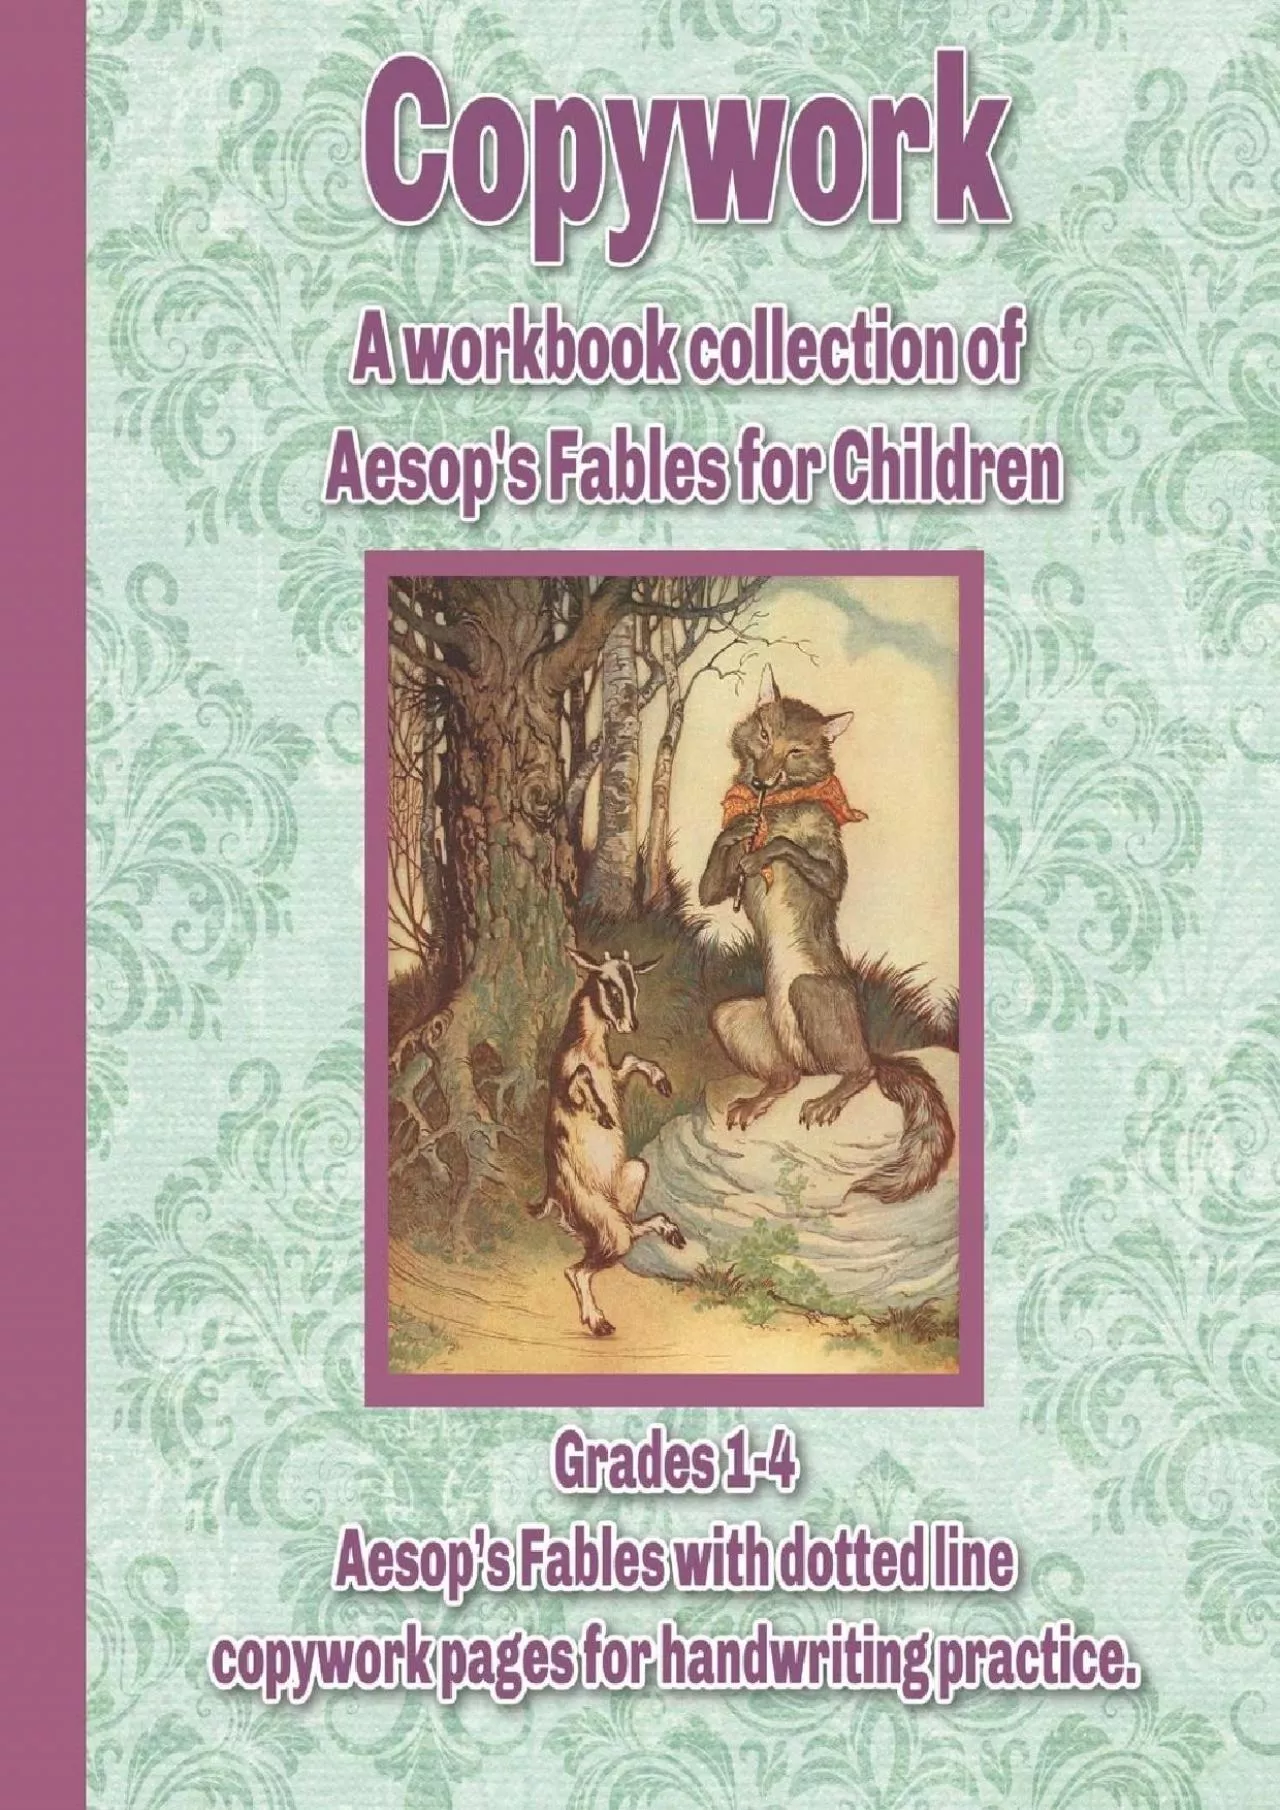 [EBOOK] Copywork: A workbook collection of Aesops Fables for Children: Grades 1-4 Aesop’s